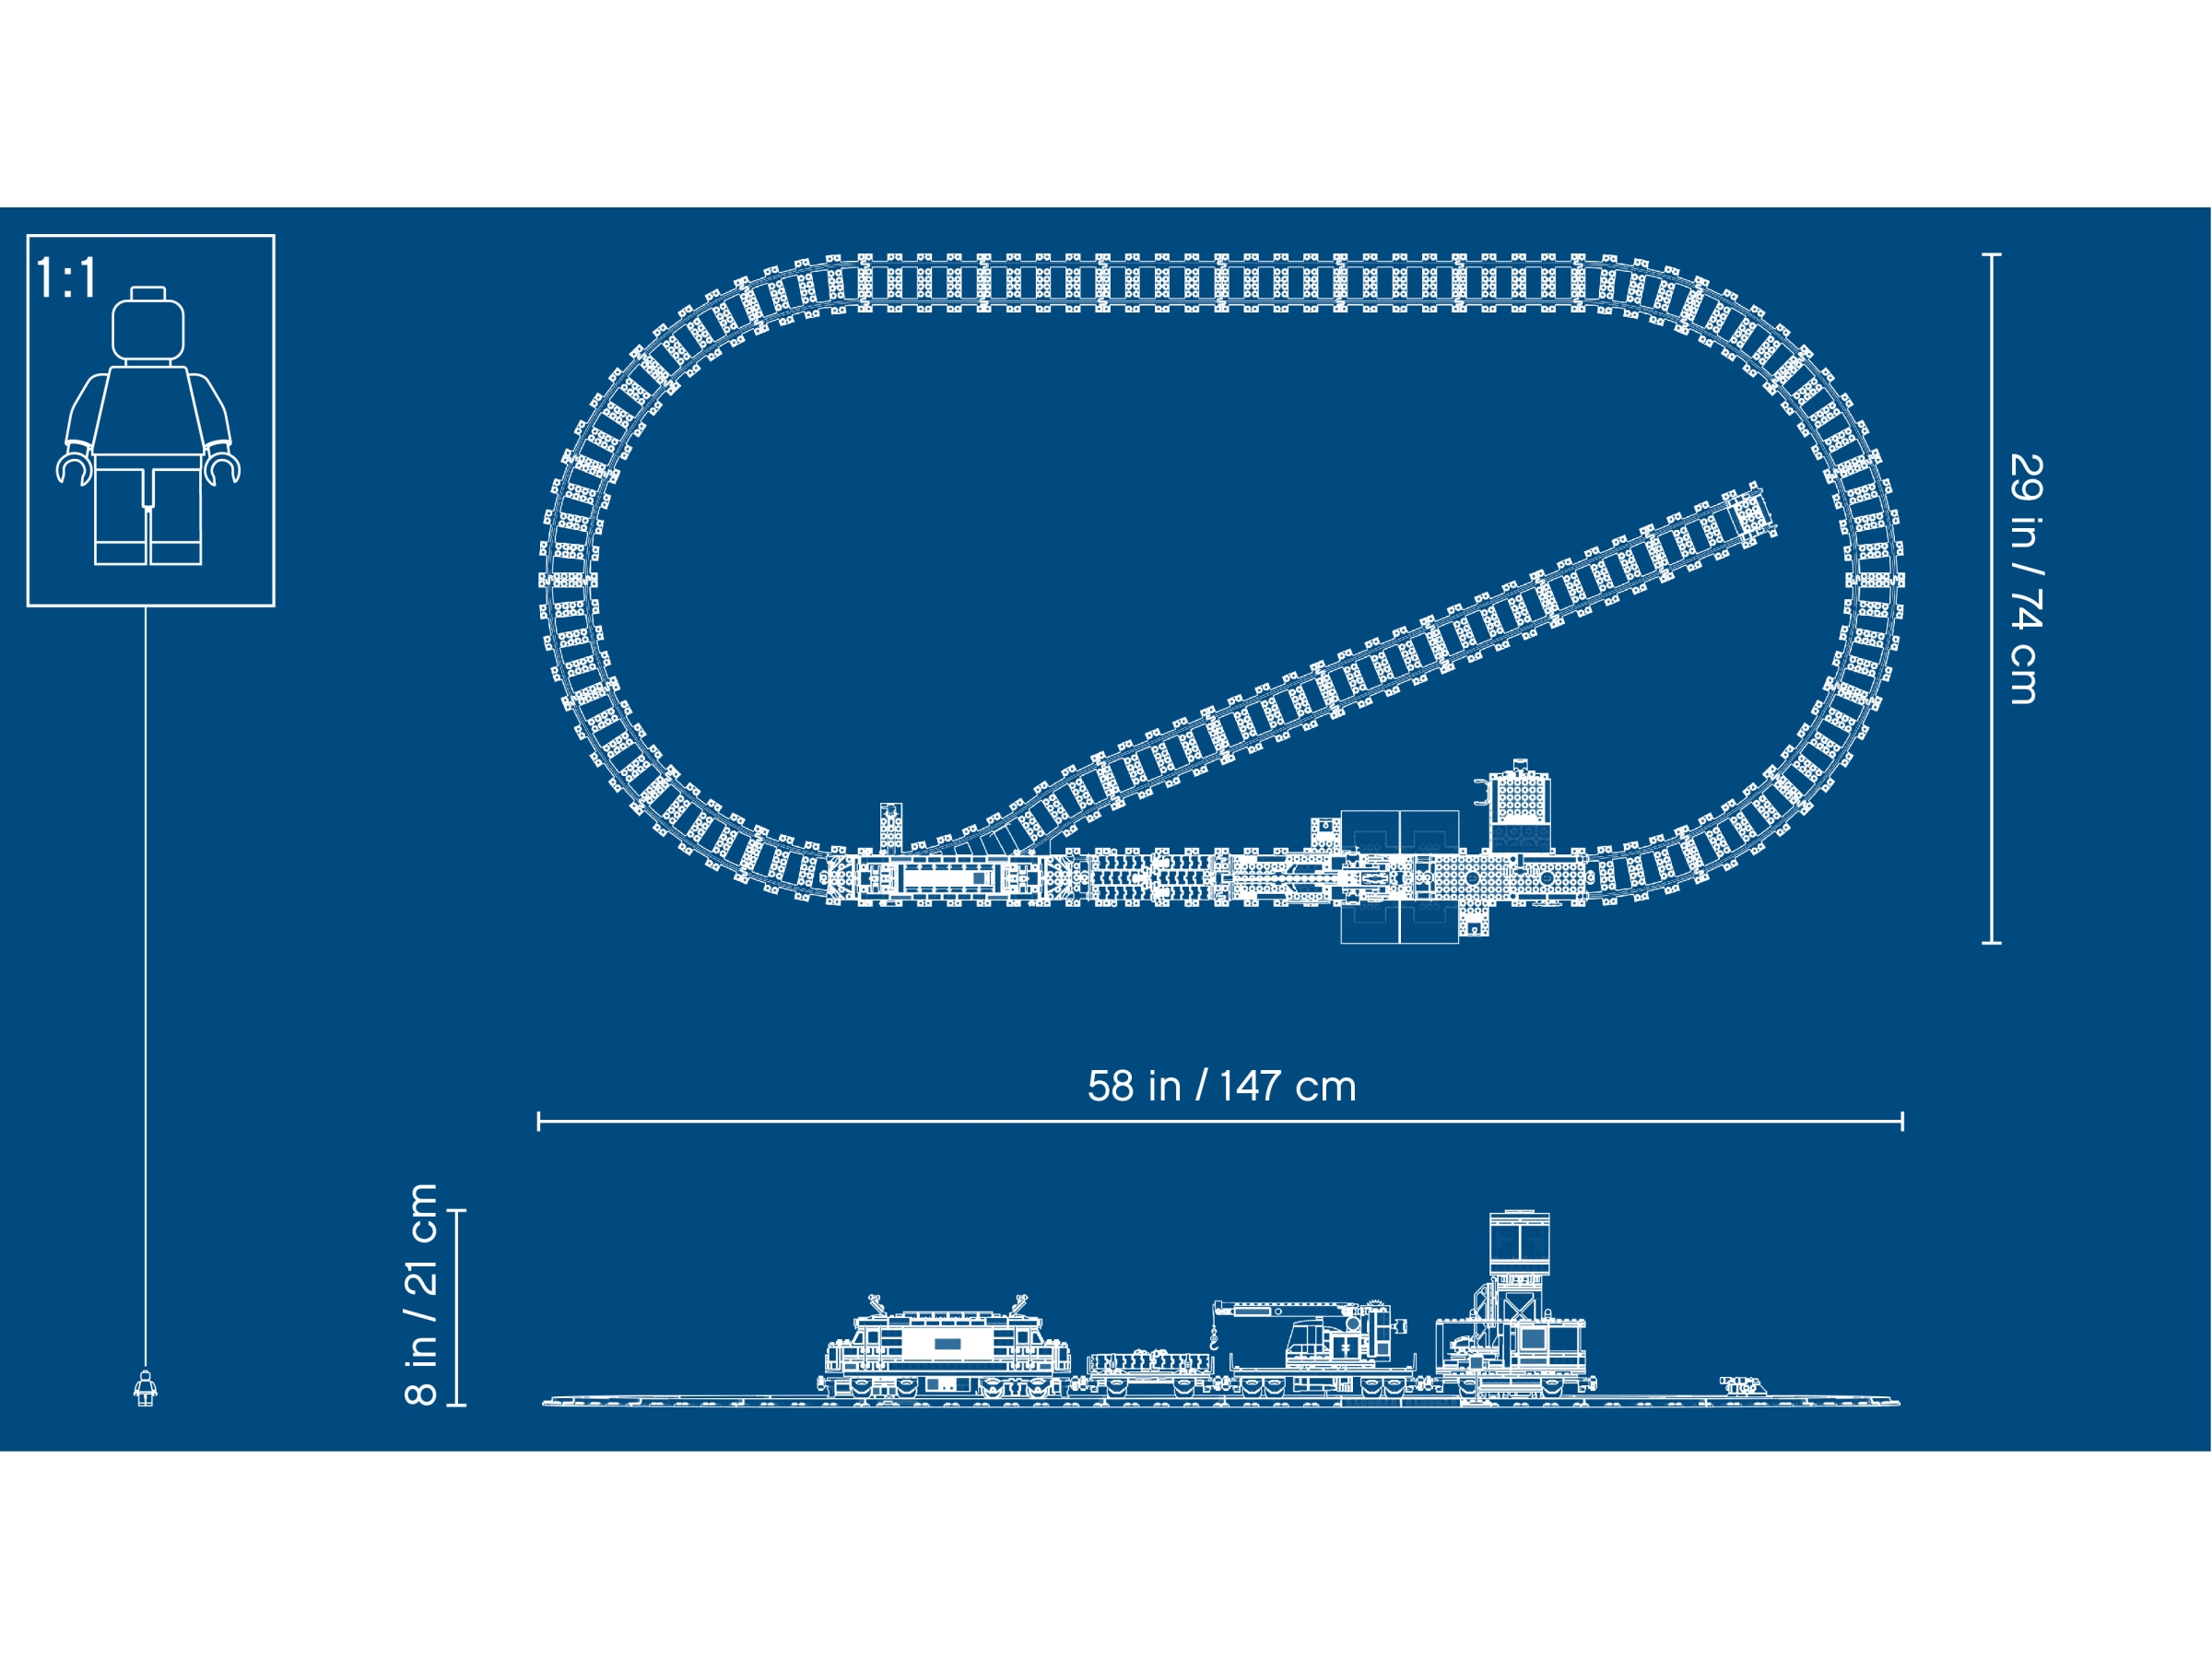 LEGO 60198 City Cargo Train Heavy Goods 10 Speed Bluetooth